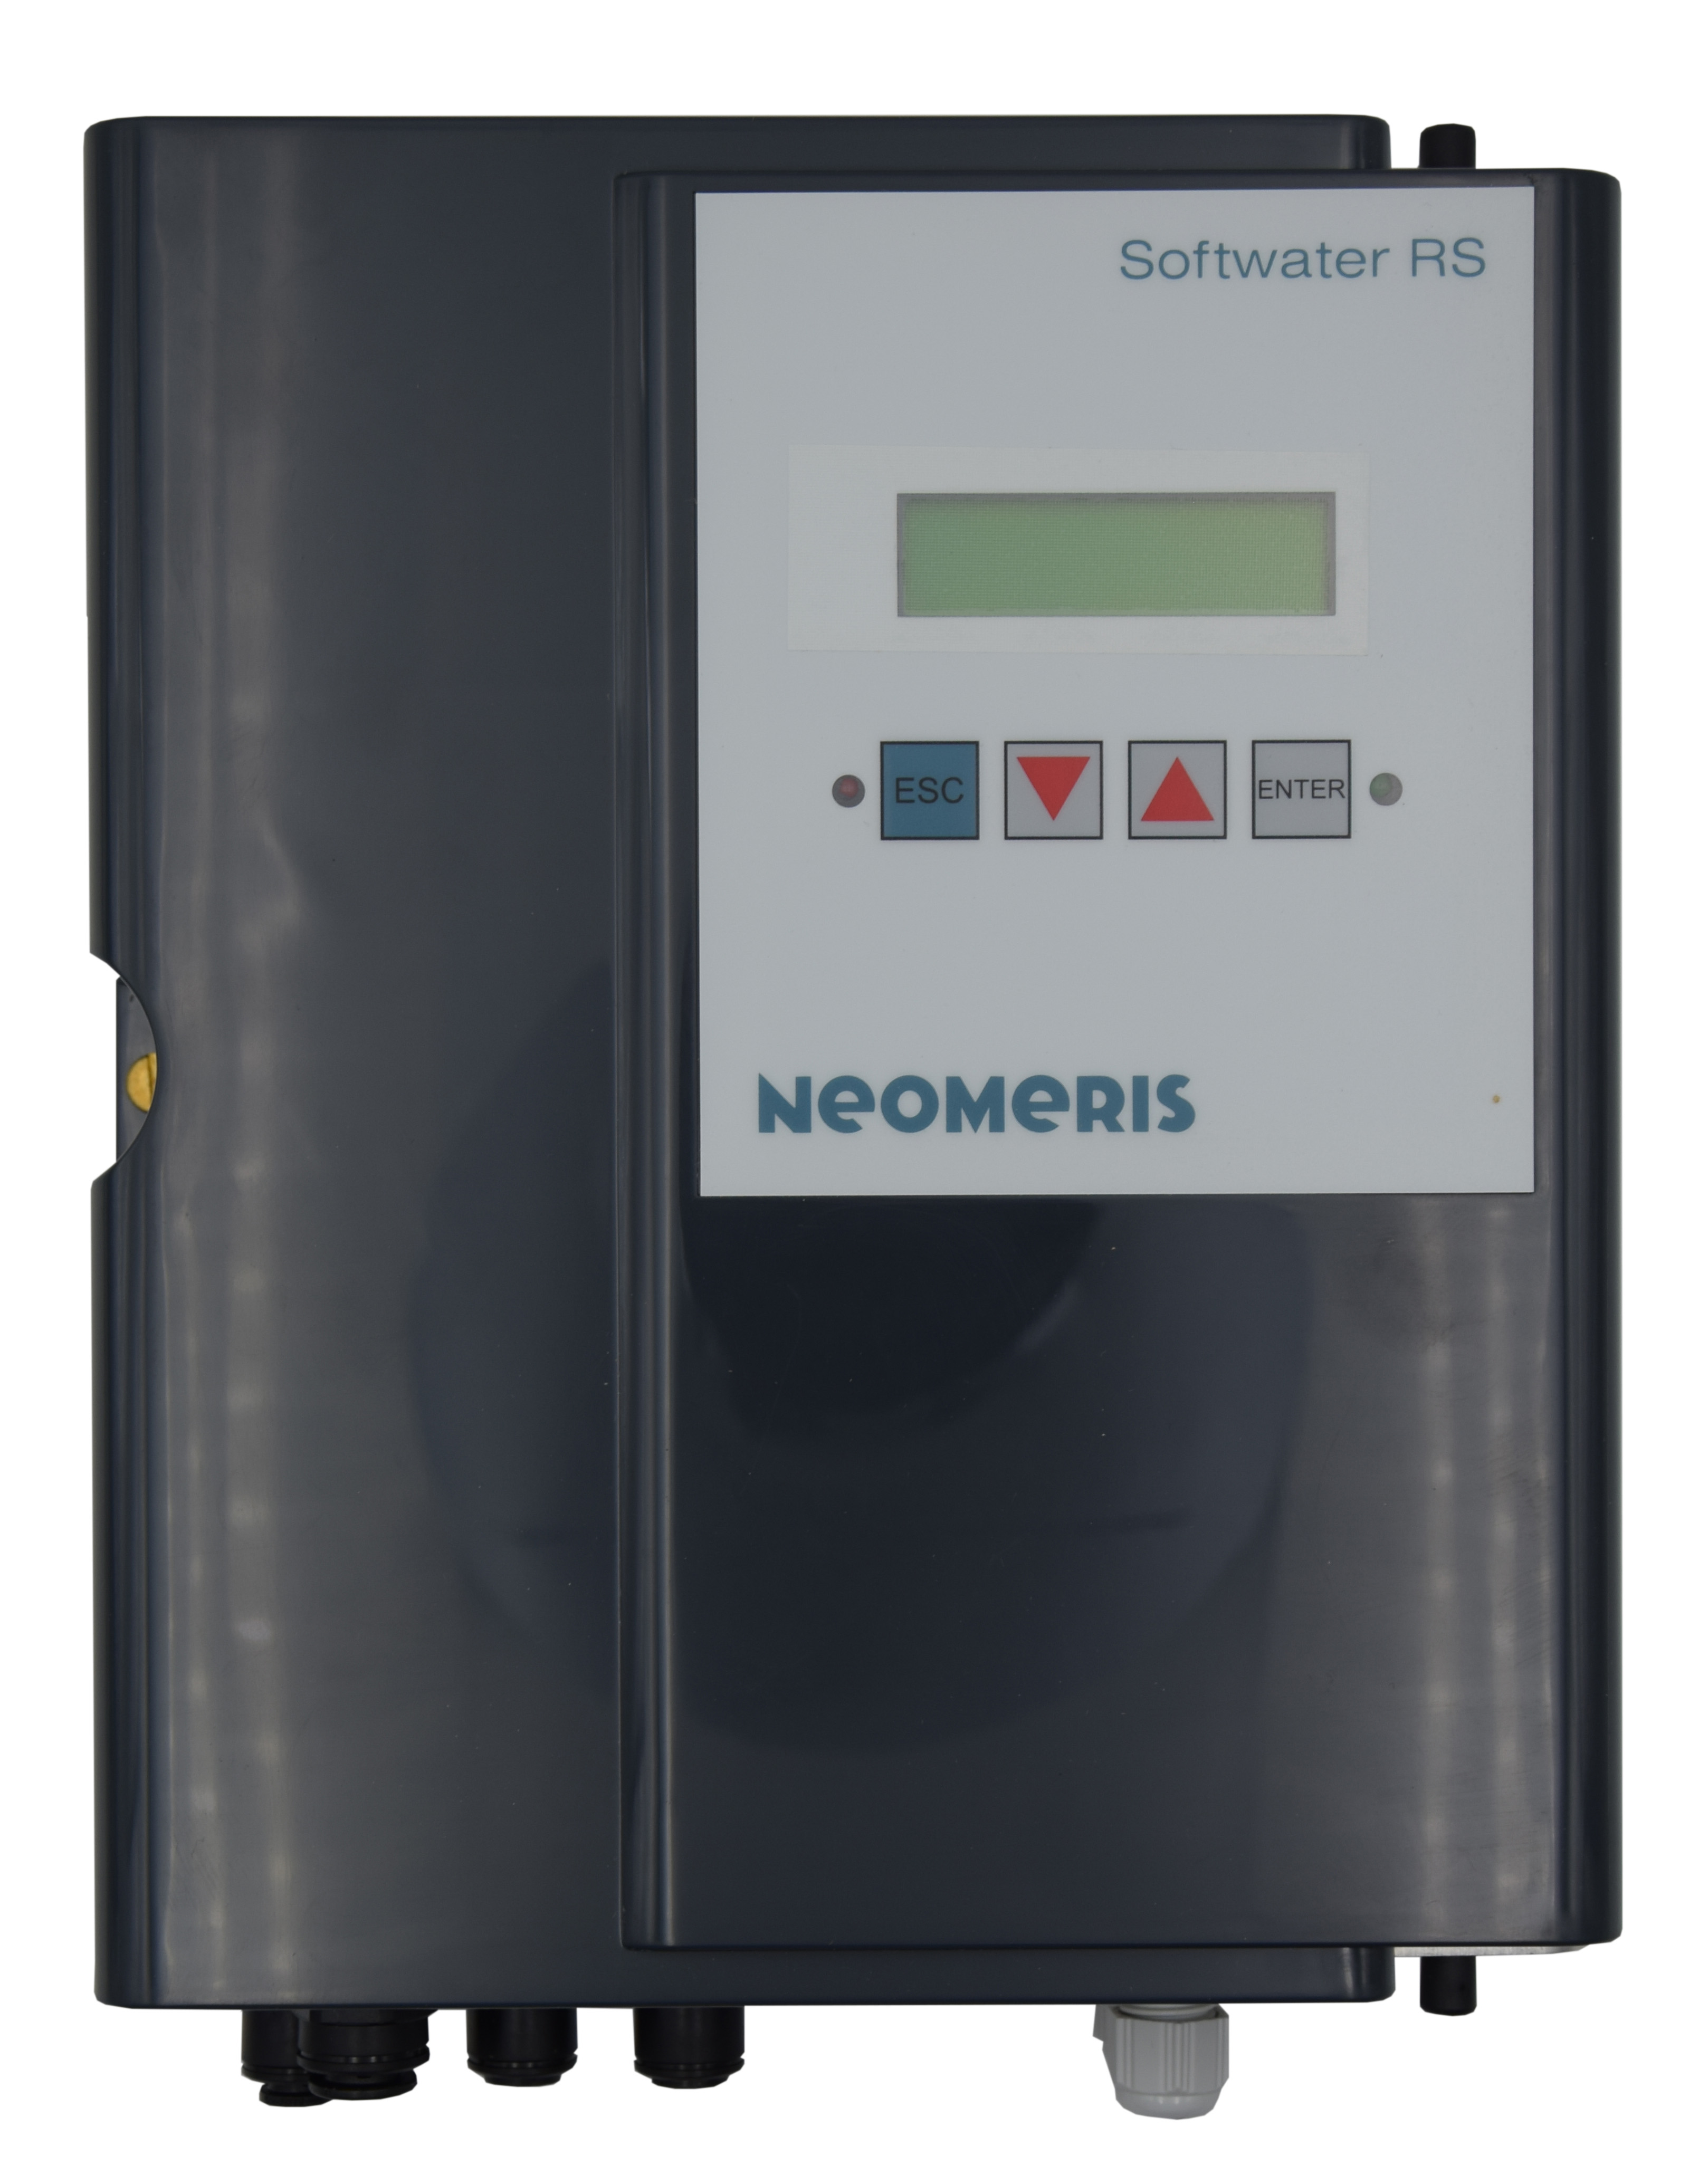 NEOMERIS Softwater RS (Resin Sensor) - special offer